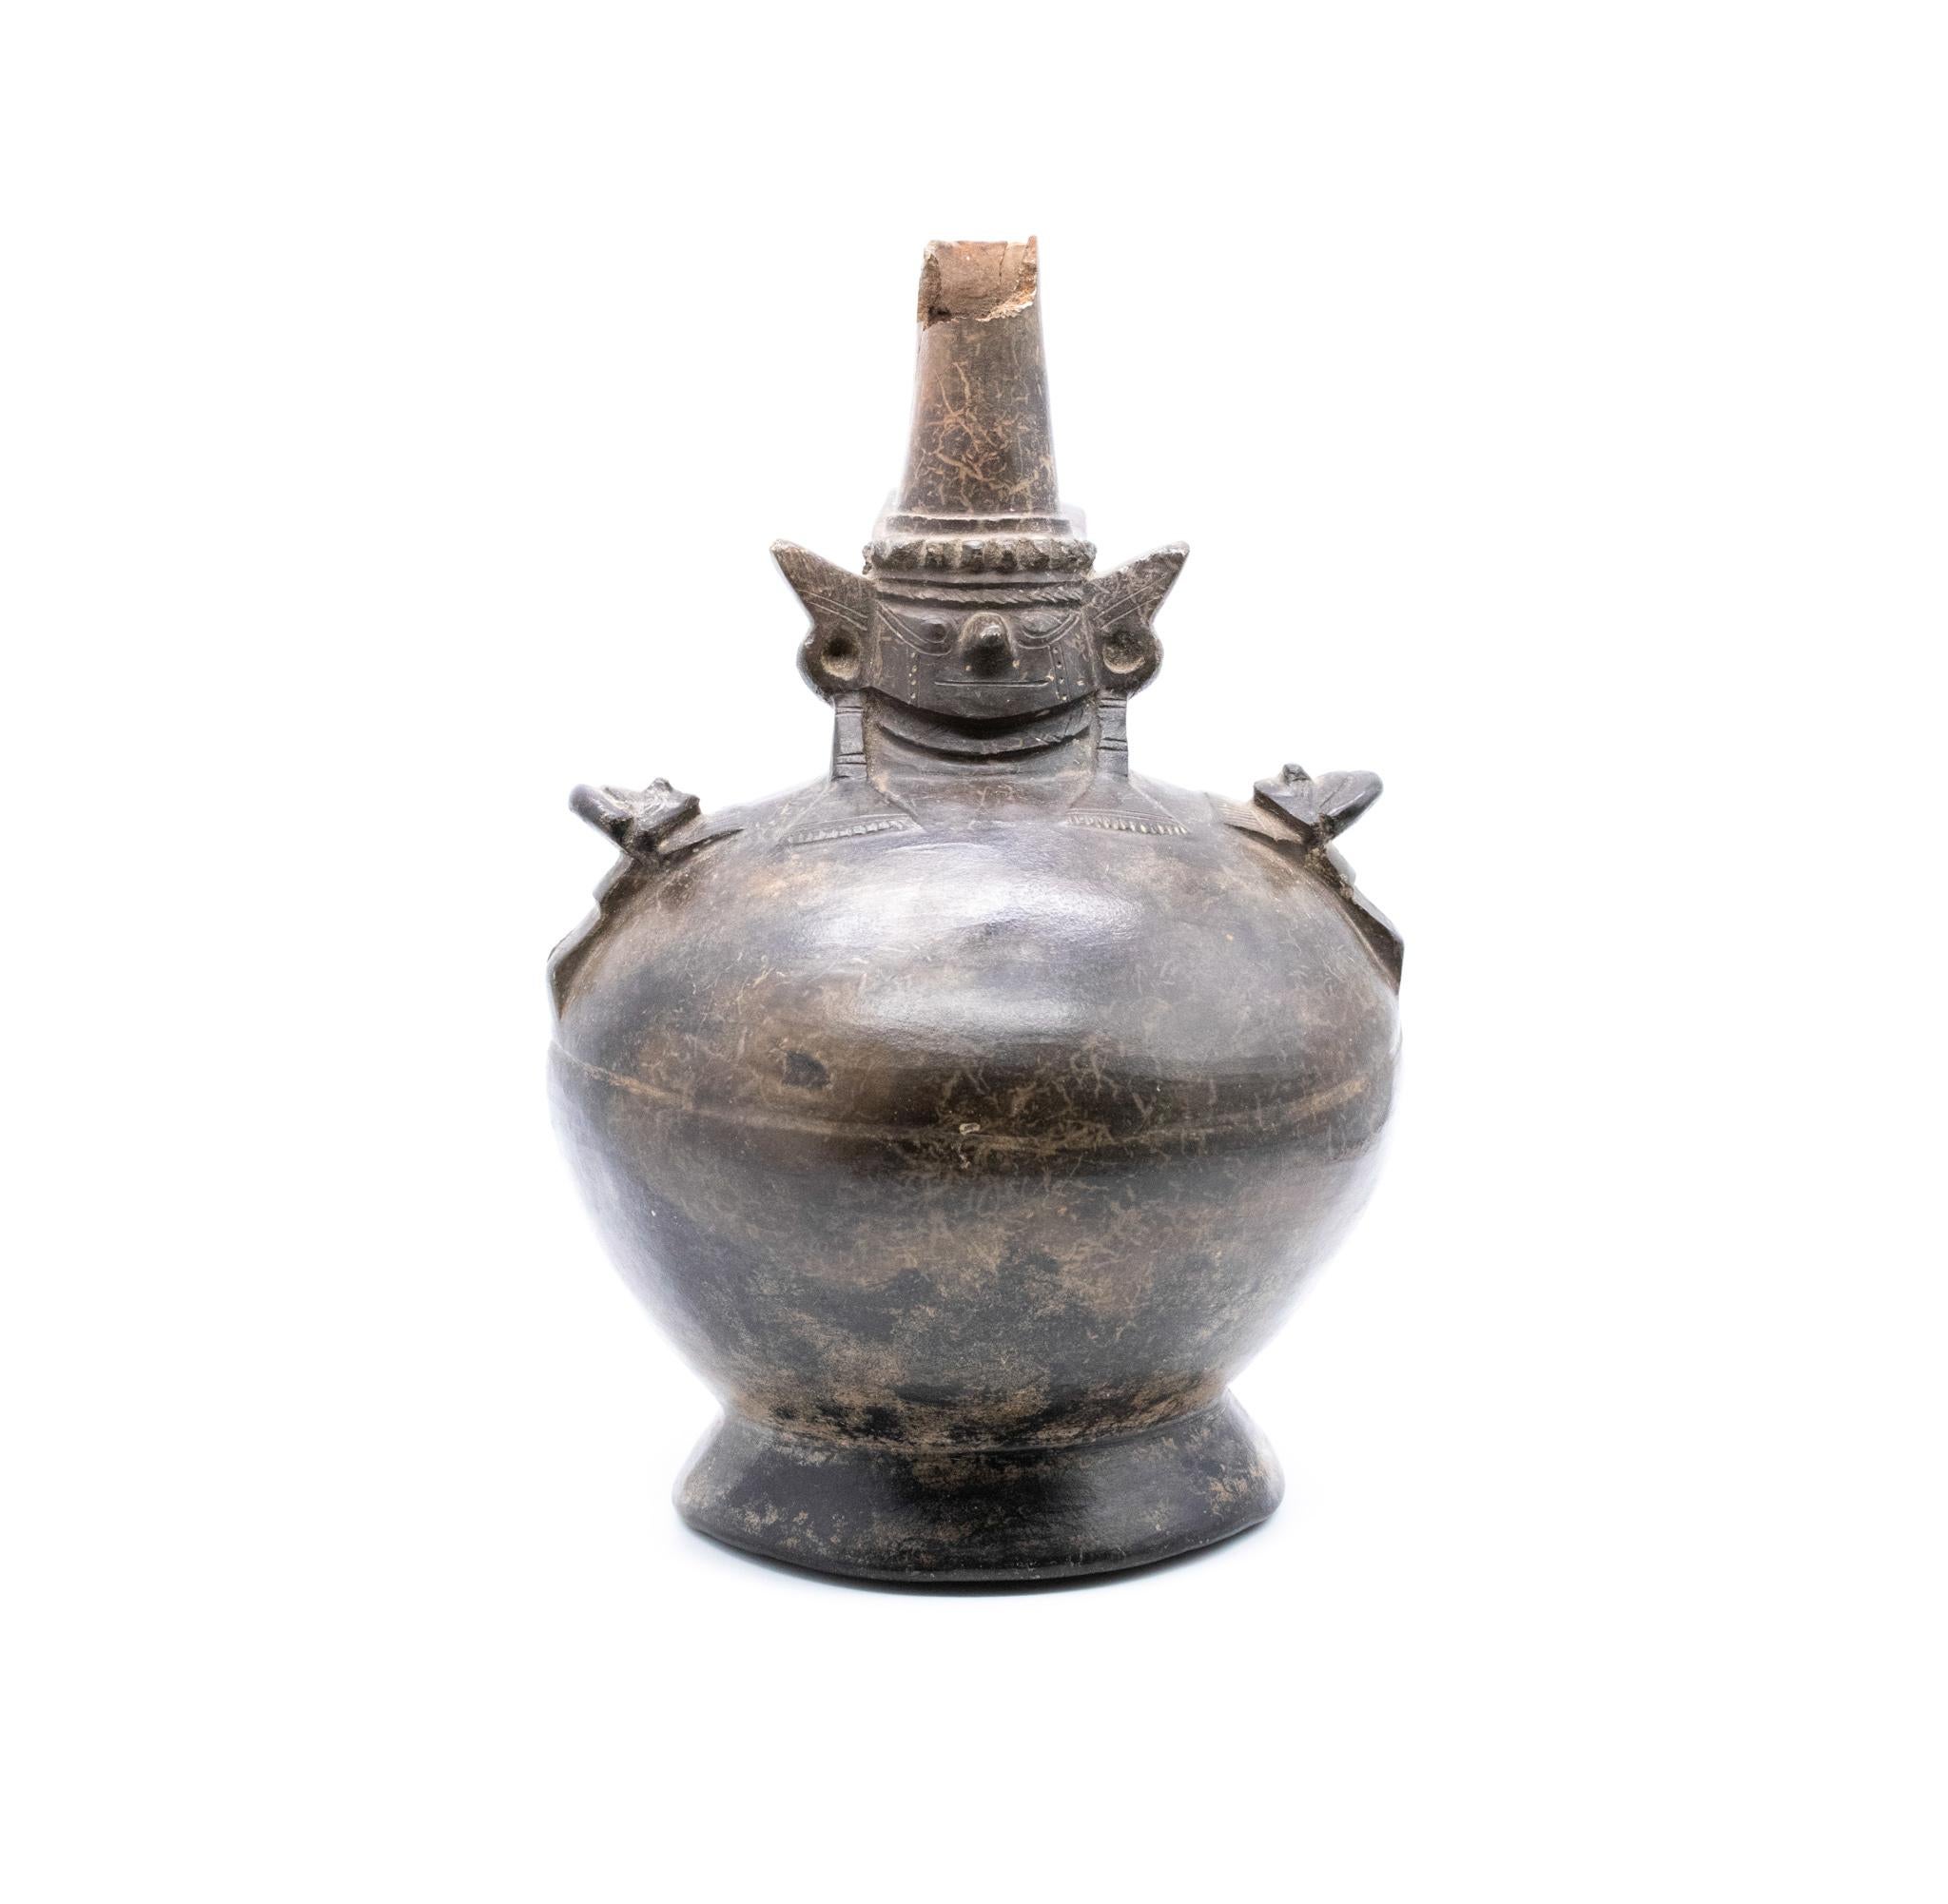 Peruvian Peru Inca 1200 AD Lambayeque Pre-Columbian Blackware Ceramic Vase with Warrior For Sale